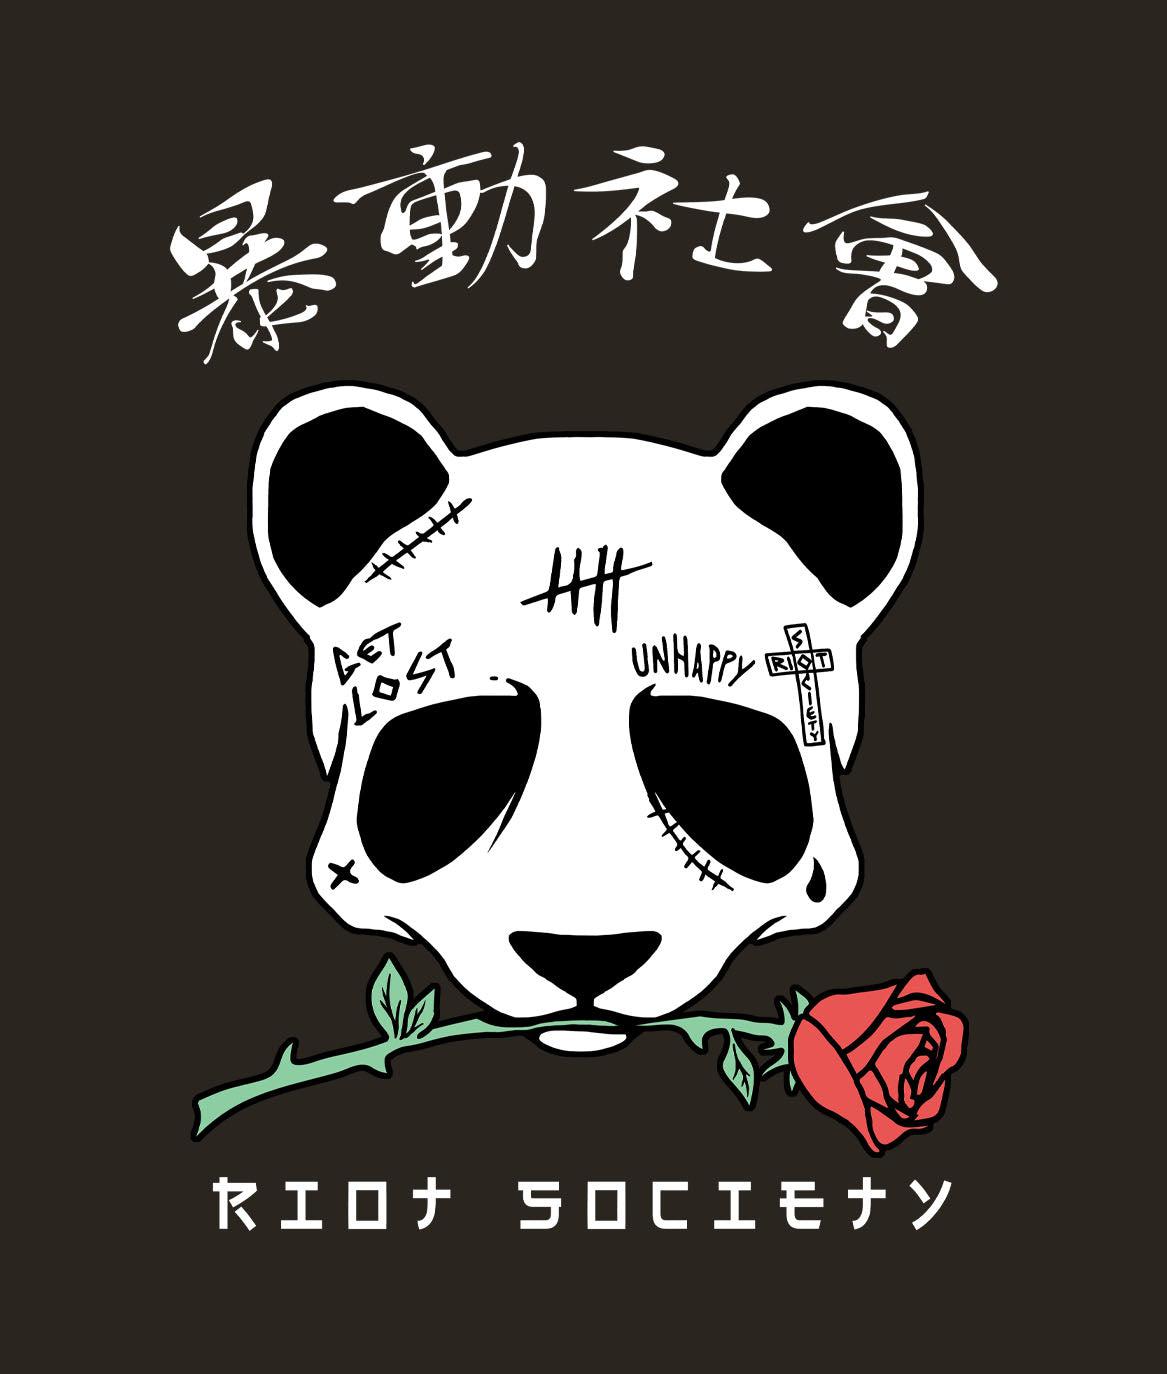 Panda Rose Skull Tattoo Womens Crewneck Sweatshirt - - Riot Society